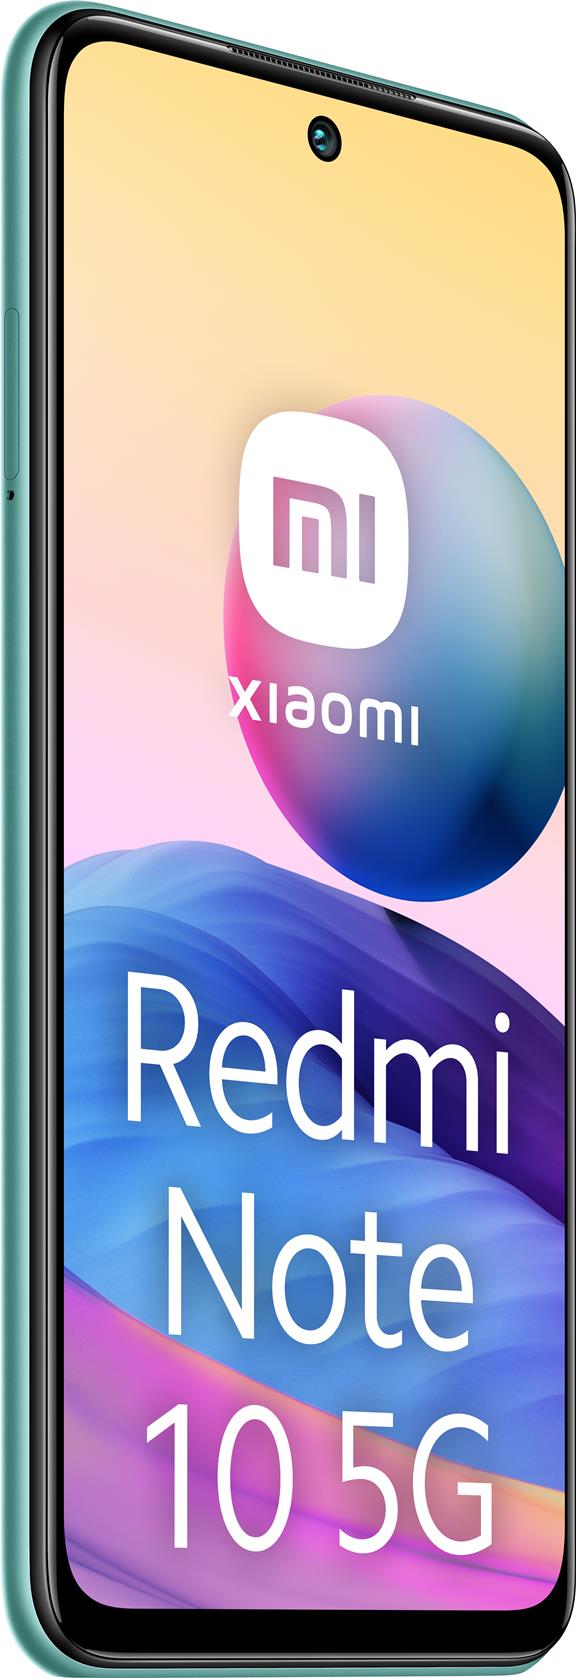 RE-9510K19X0007-PQ smartphone reacondicionado xiaomi redmi note 10 5g aurora green 4gb ram 64gb rom grado a